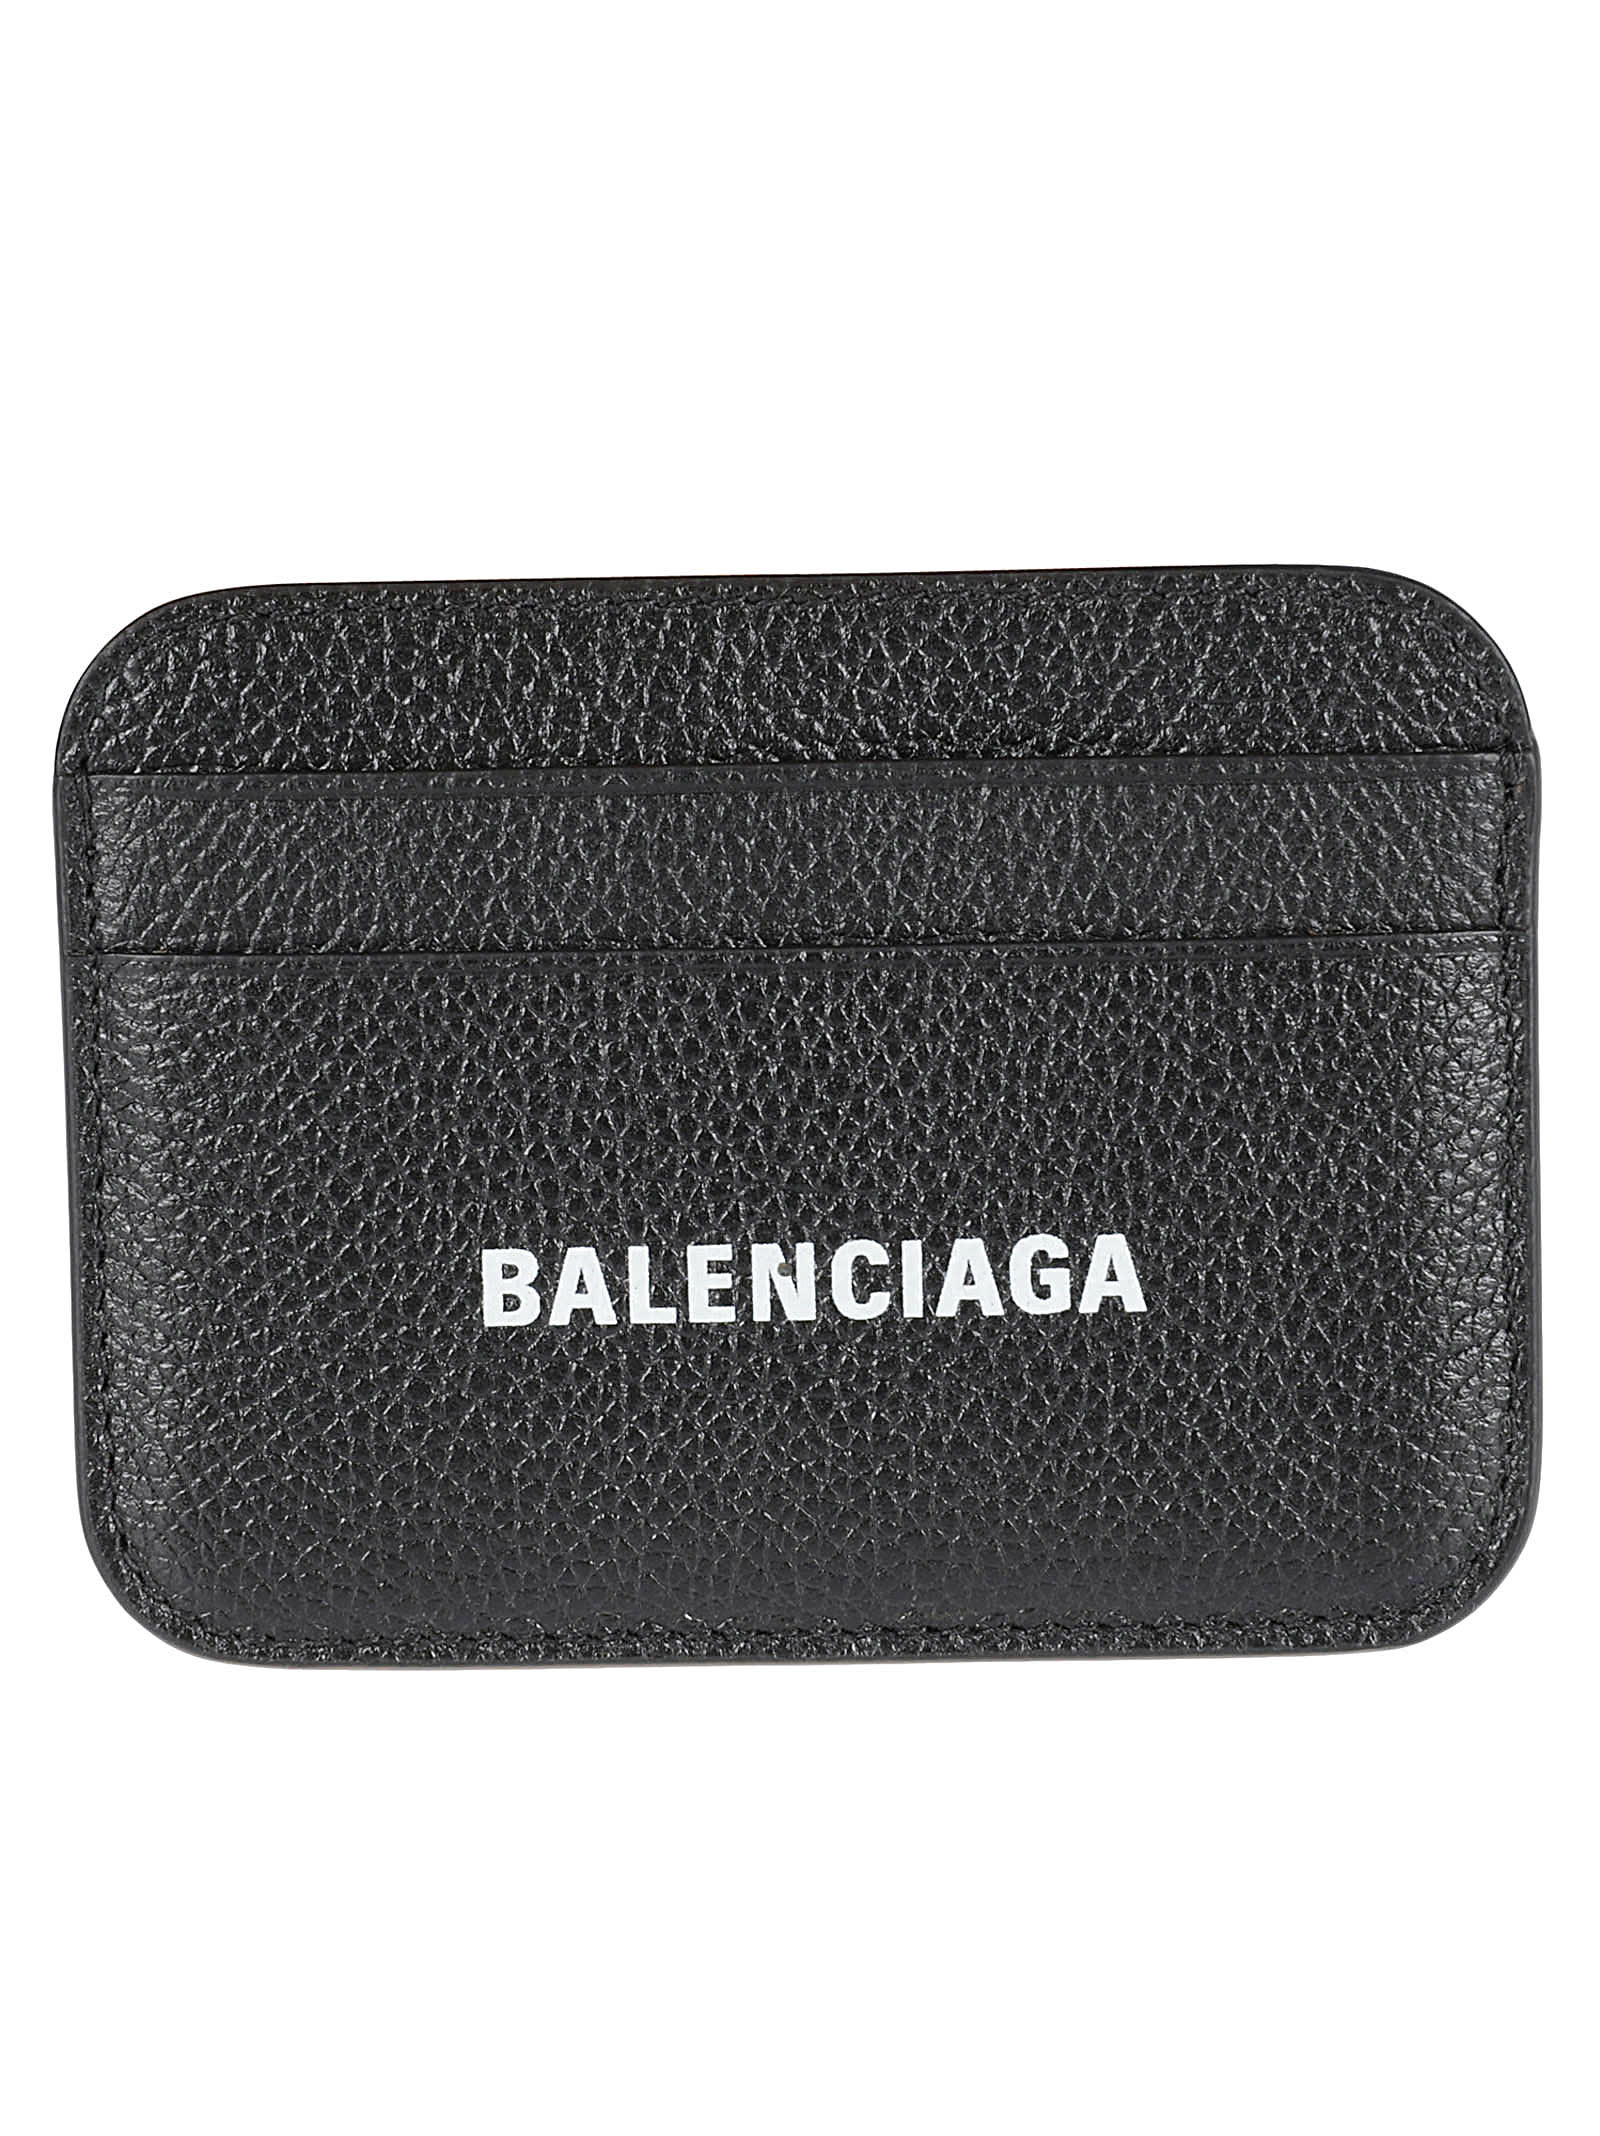 Balenciaga Grained Logo Cash Card Holder